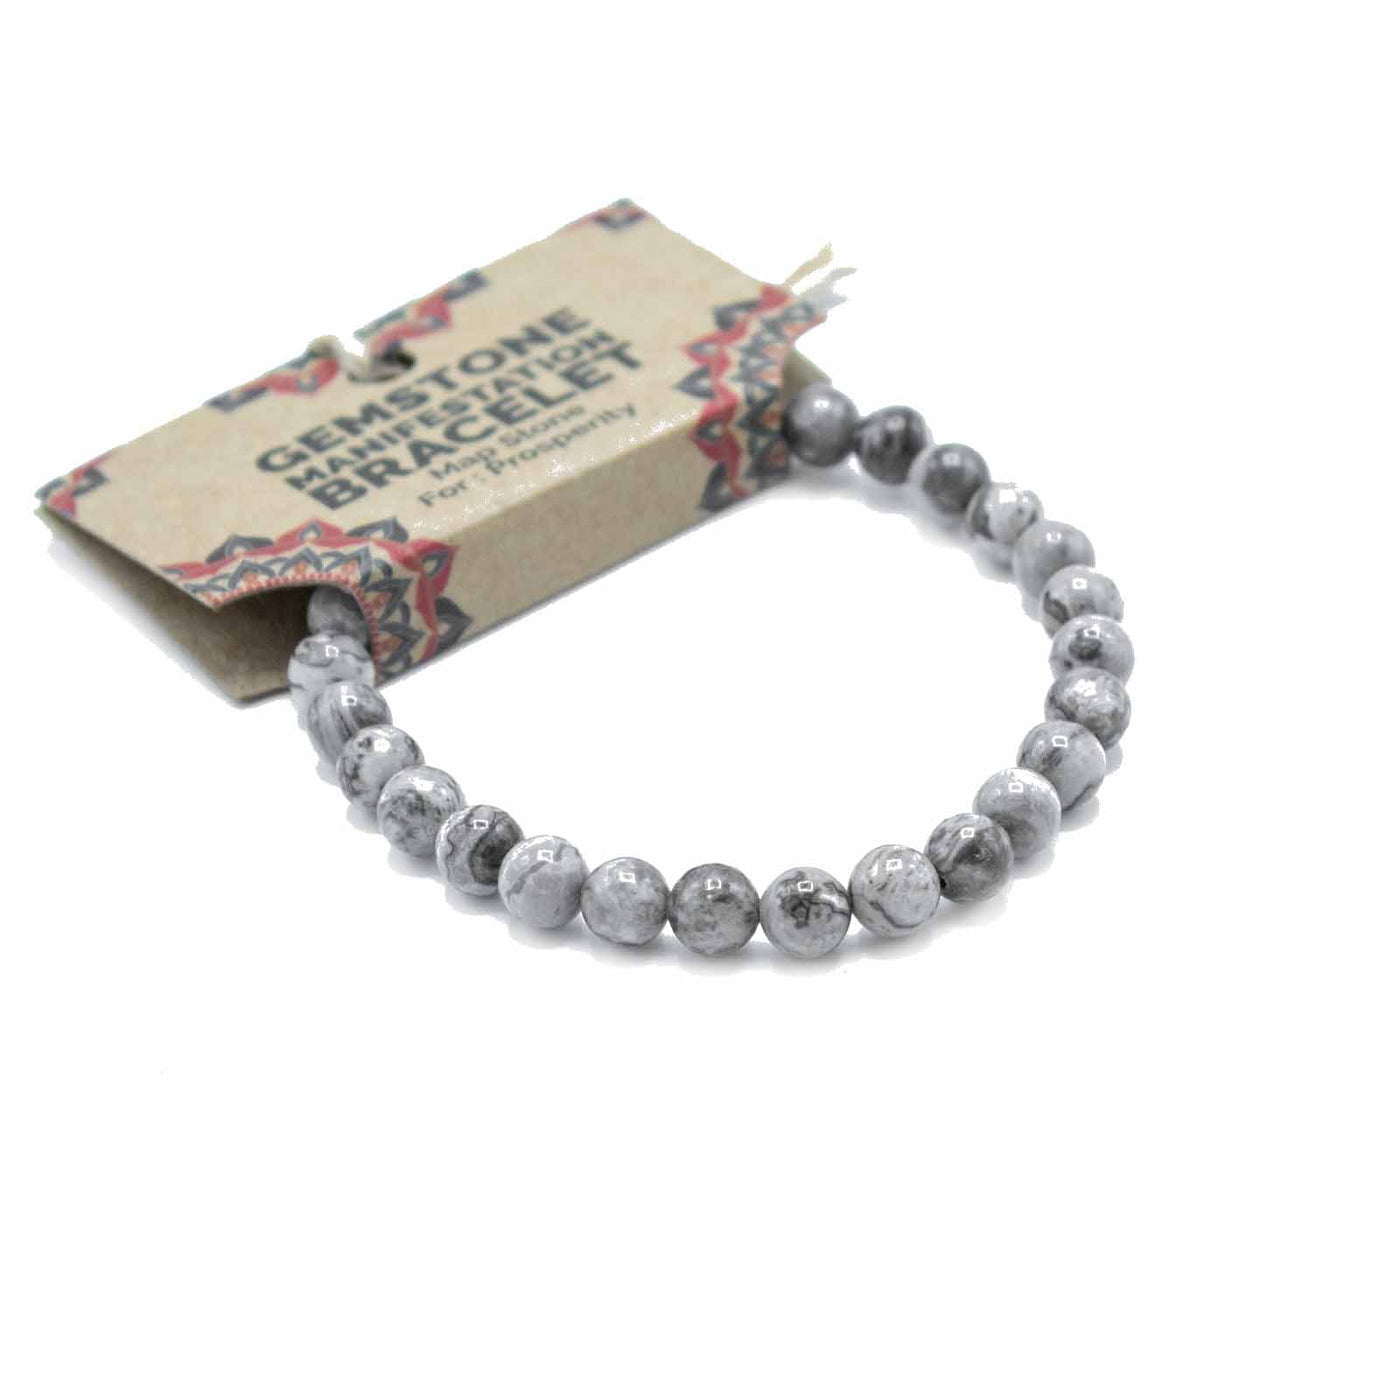 Unisex White Map Stone Beads Manifestation Prosperity Stretchy Bracelet.